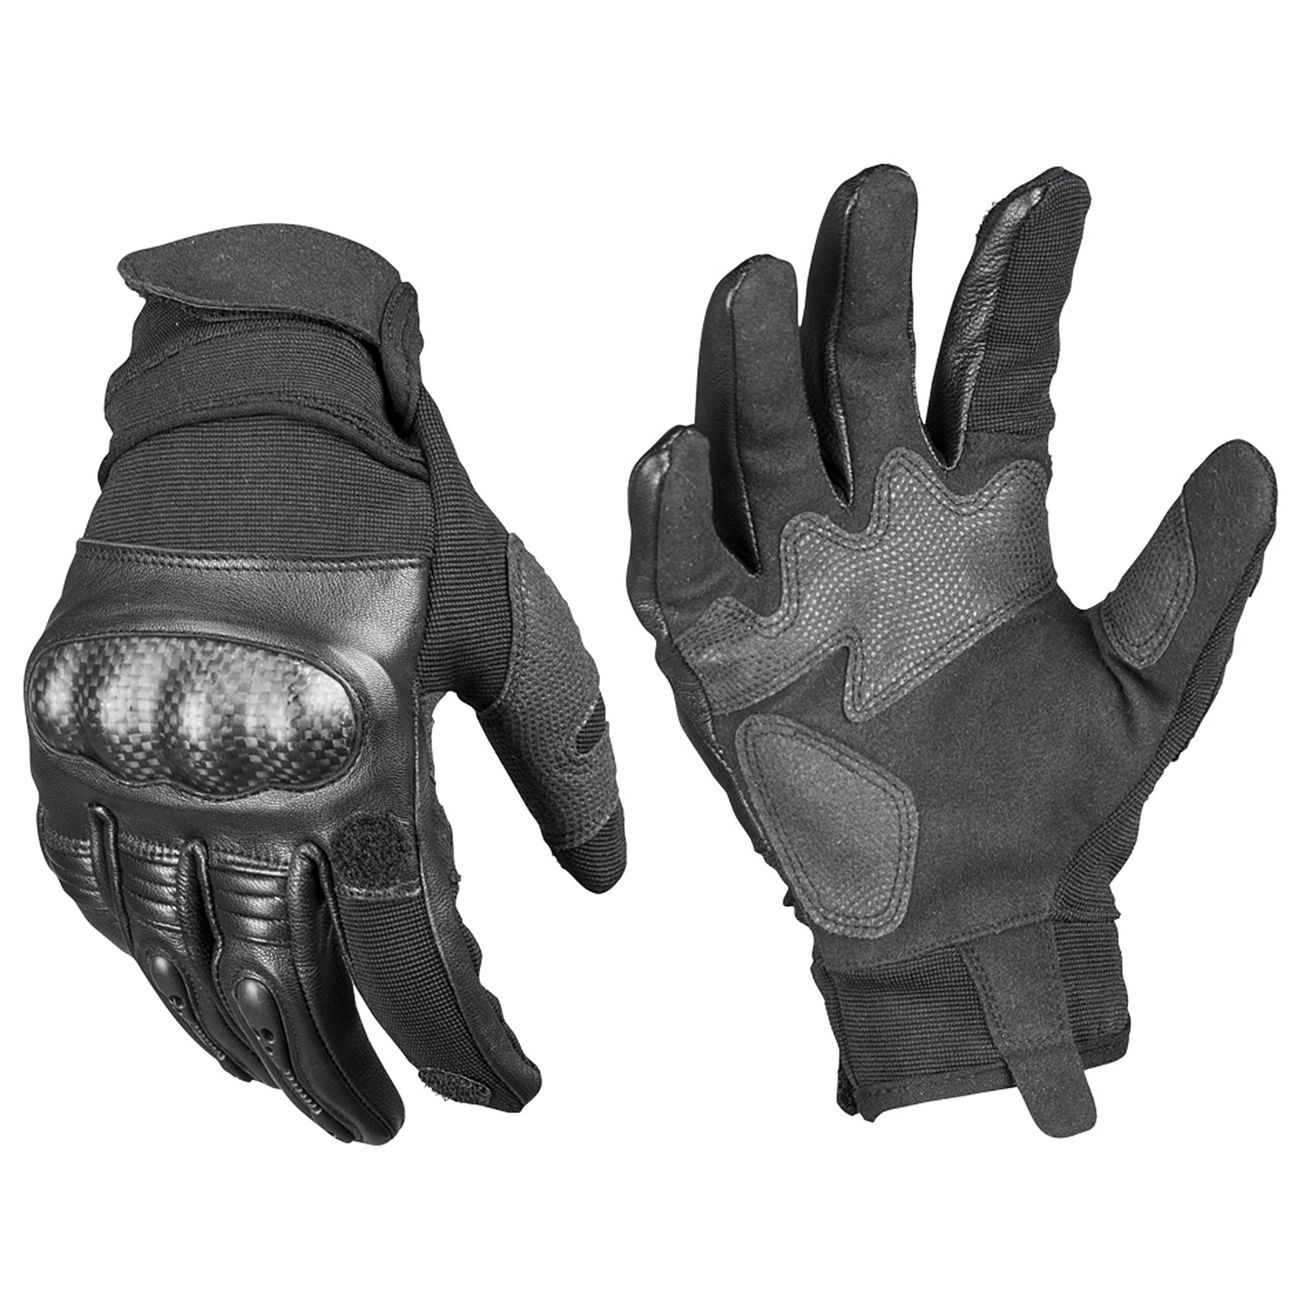 Taktische Handschuhe schwarz oliv coyote Touchscreen fähig lightweight Tactical 